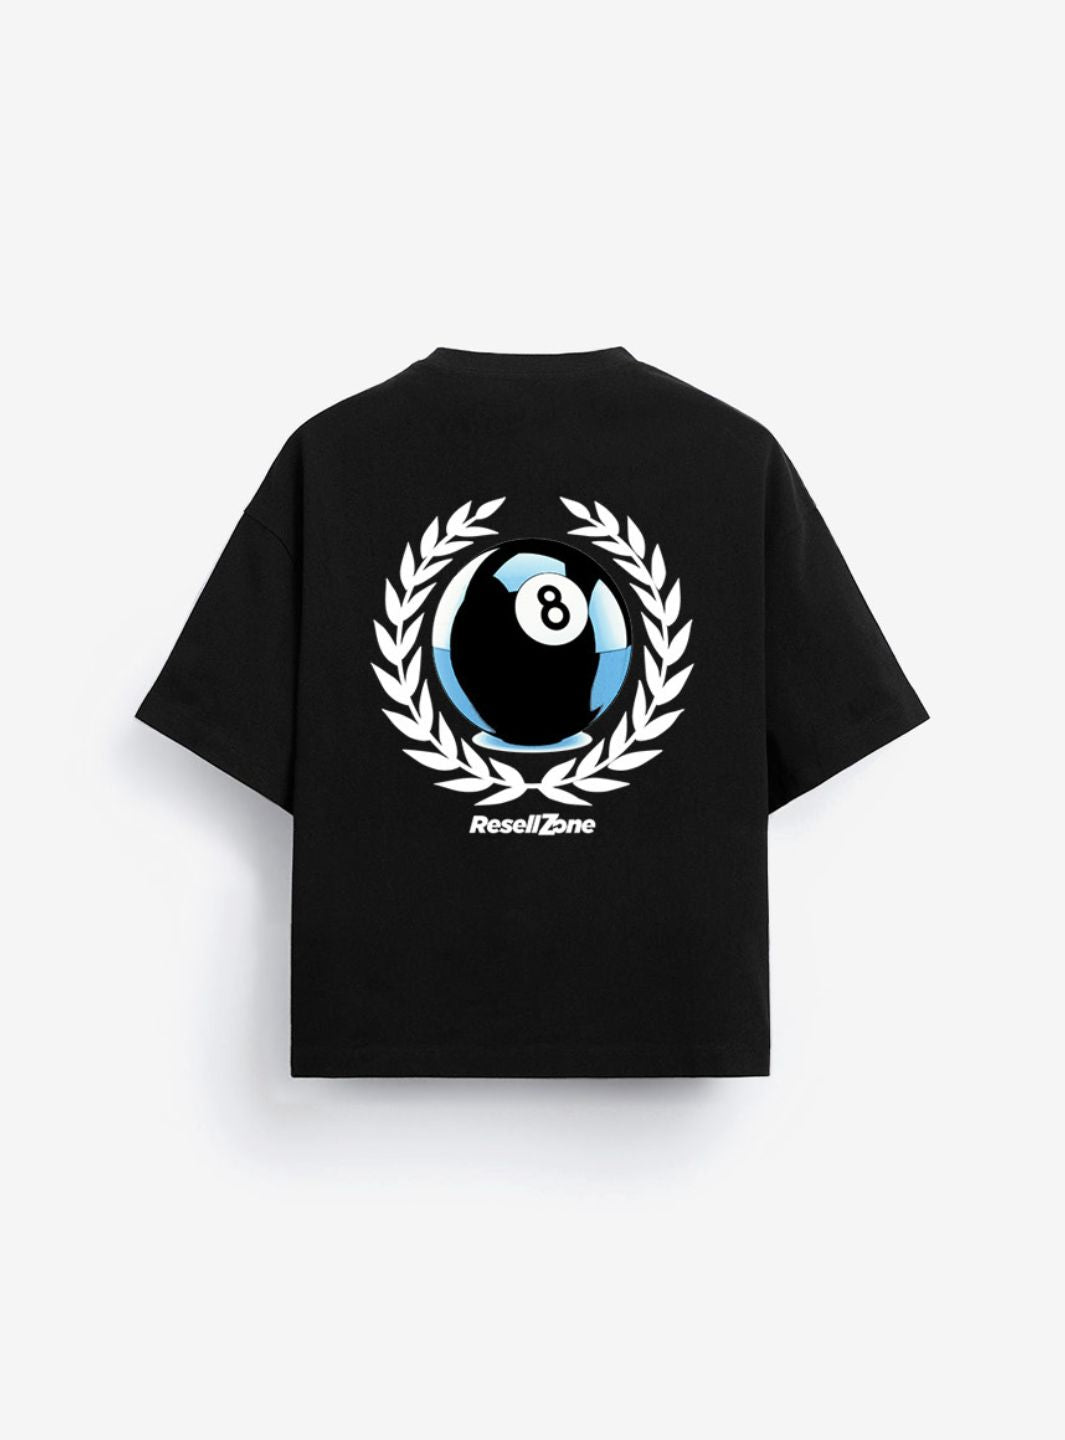 8 Ball Pool T-Shirt Black | ResellZone